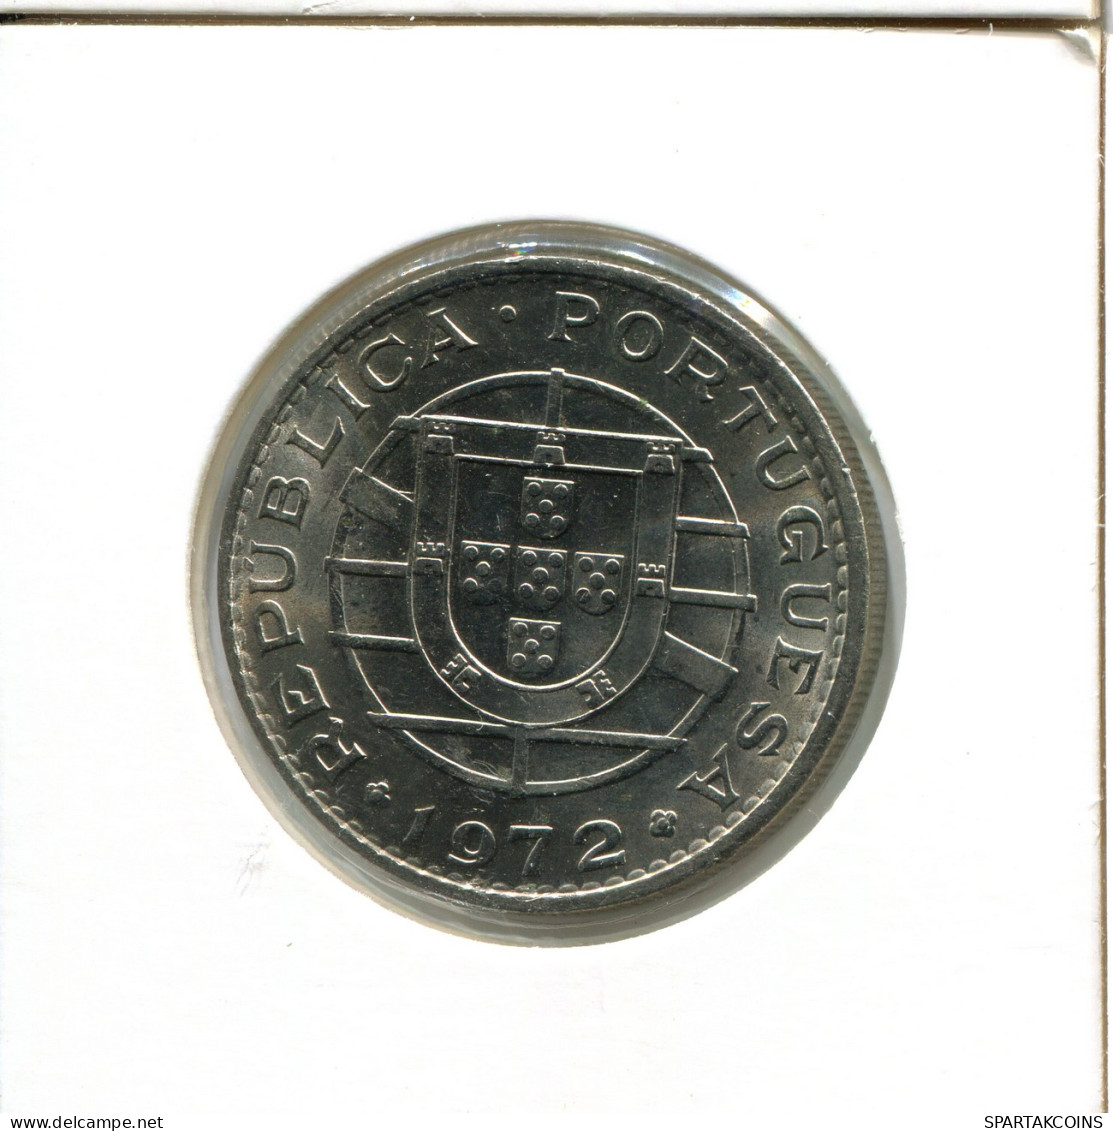 20 ESCUDOS 1971 ANGOLA Coin #AX284.U - Angola